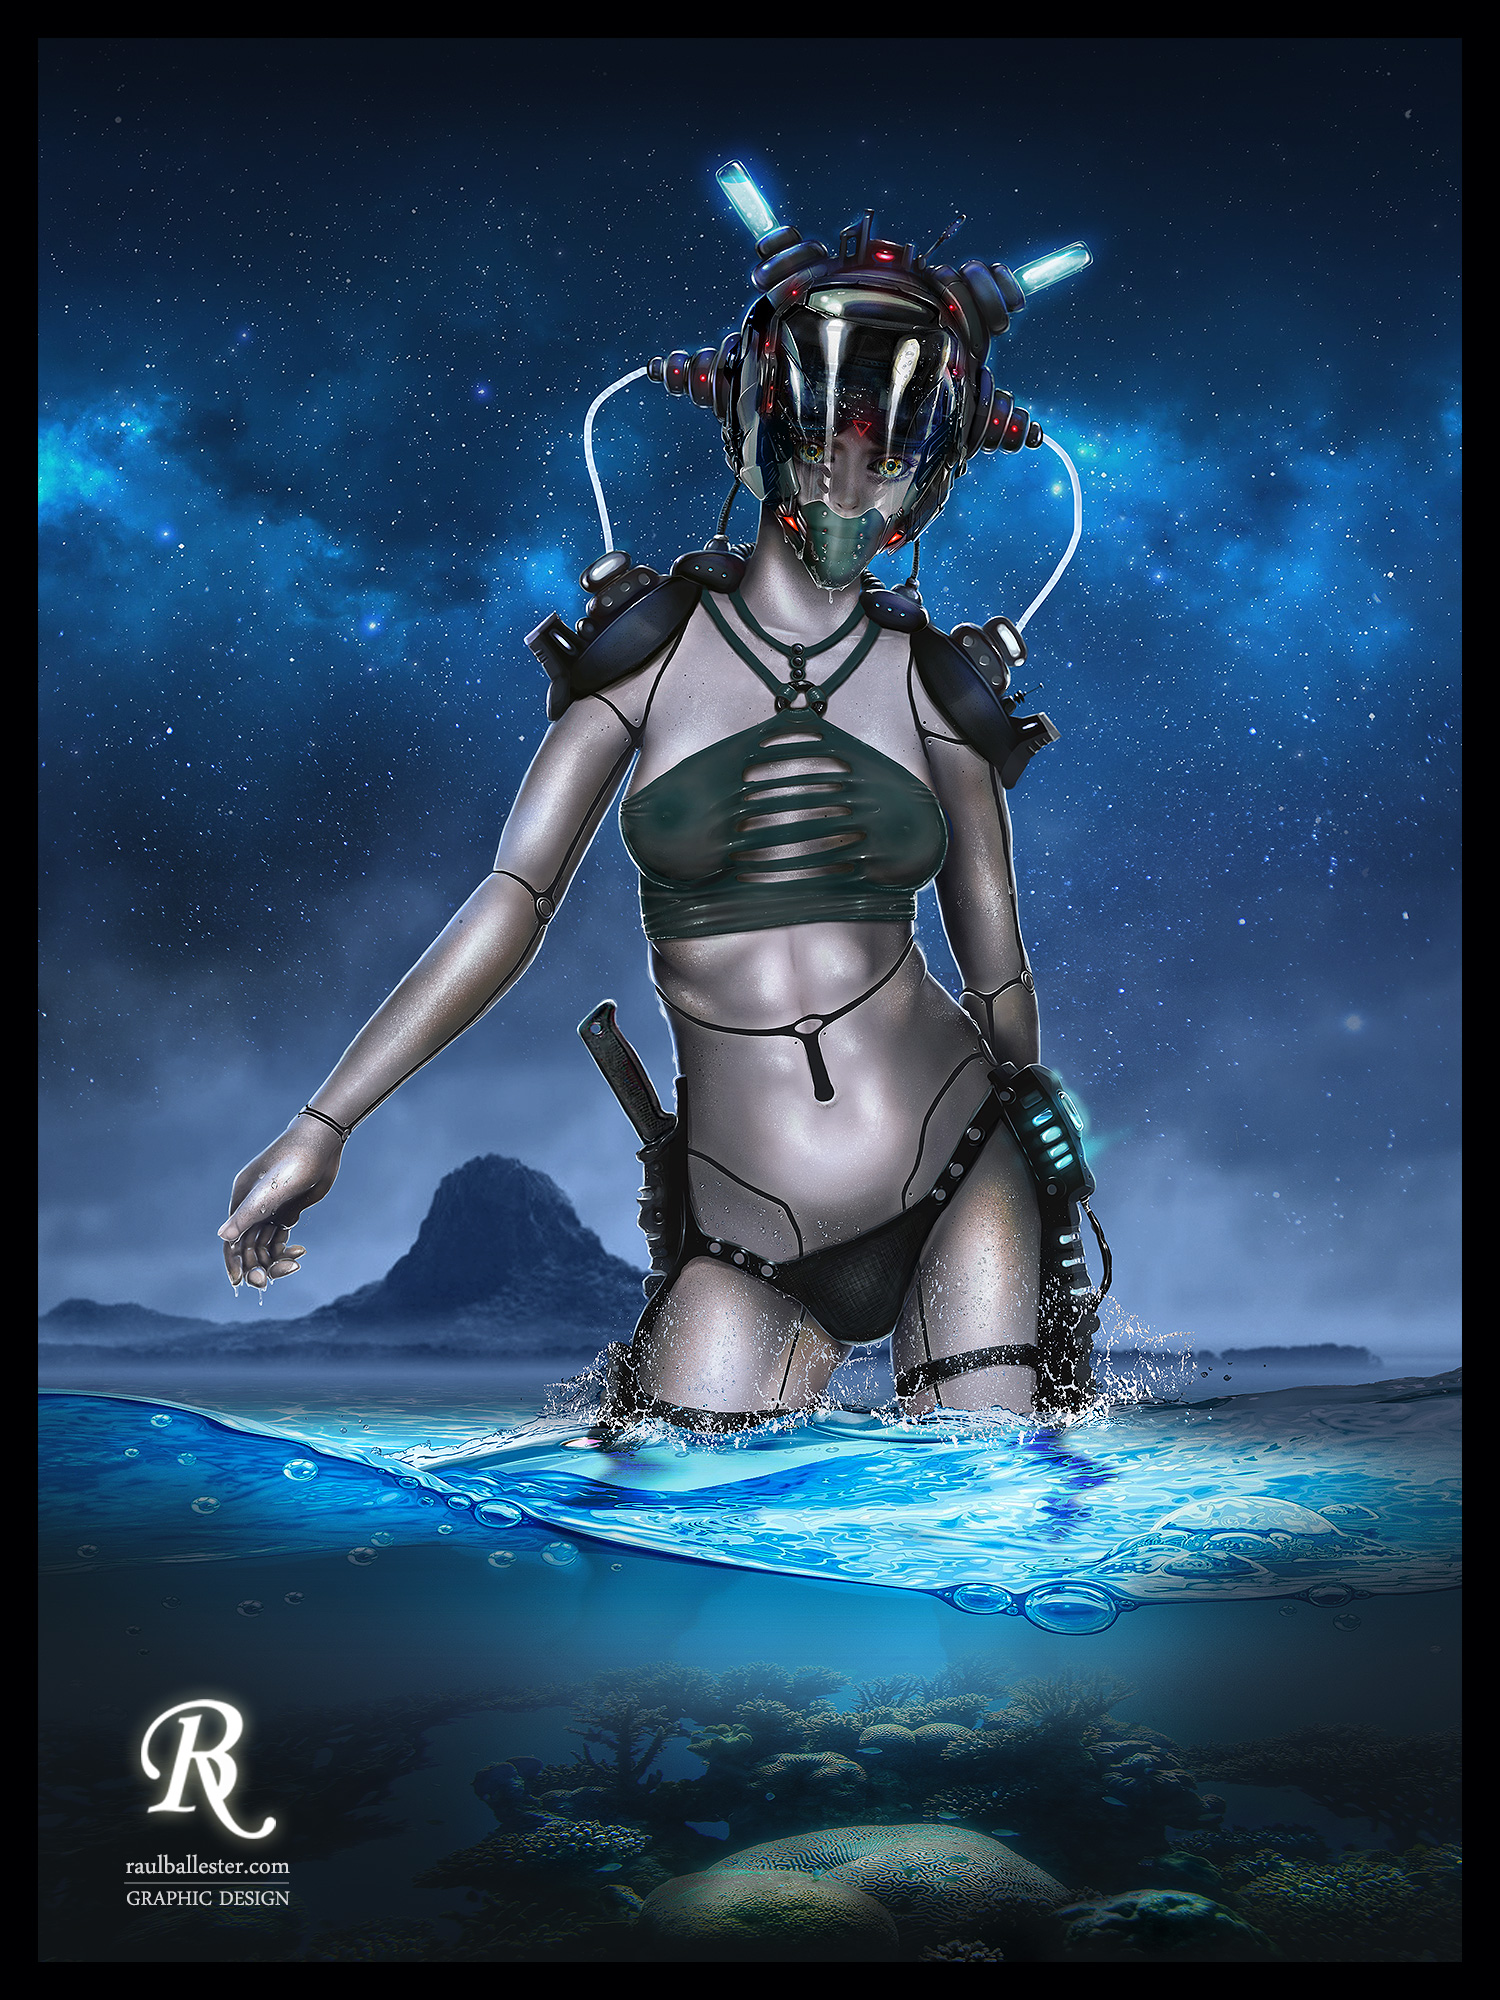 Personaje cyborg Girl snorkel